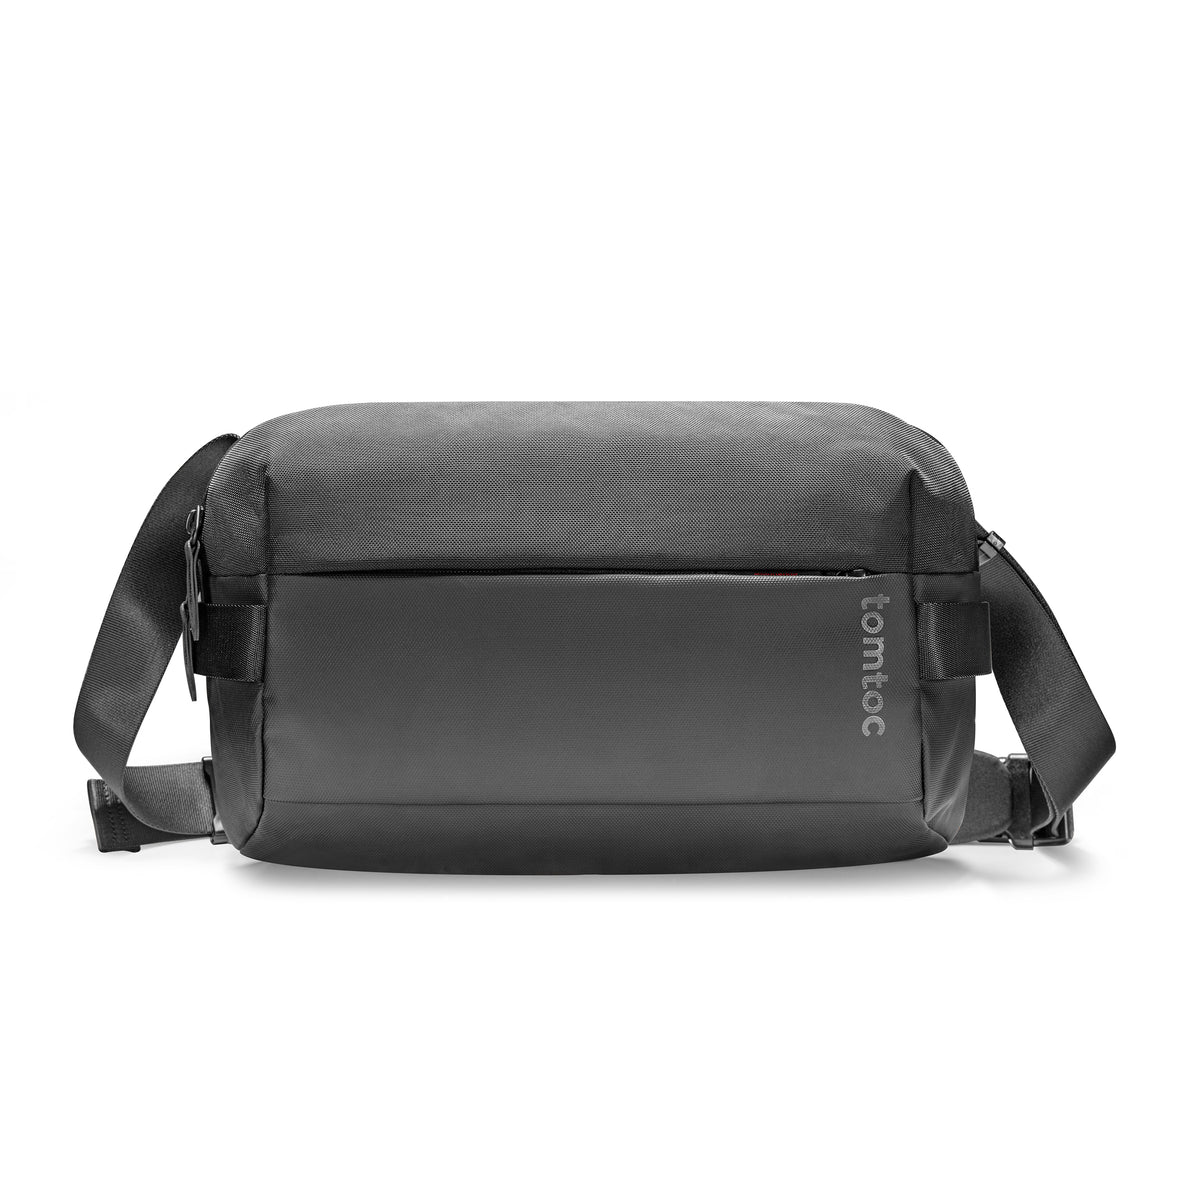 Tomtoc 11 inch EDC Sling Bag / Crossbody bag